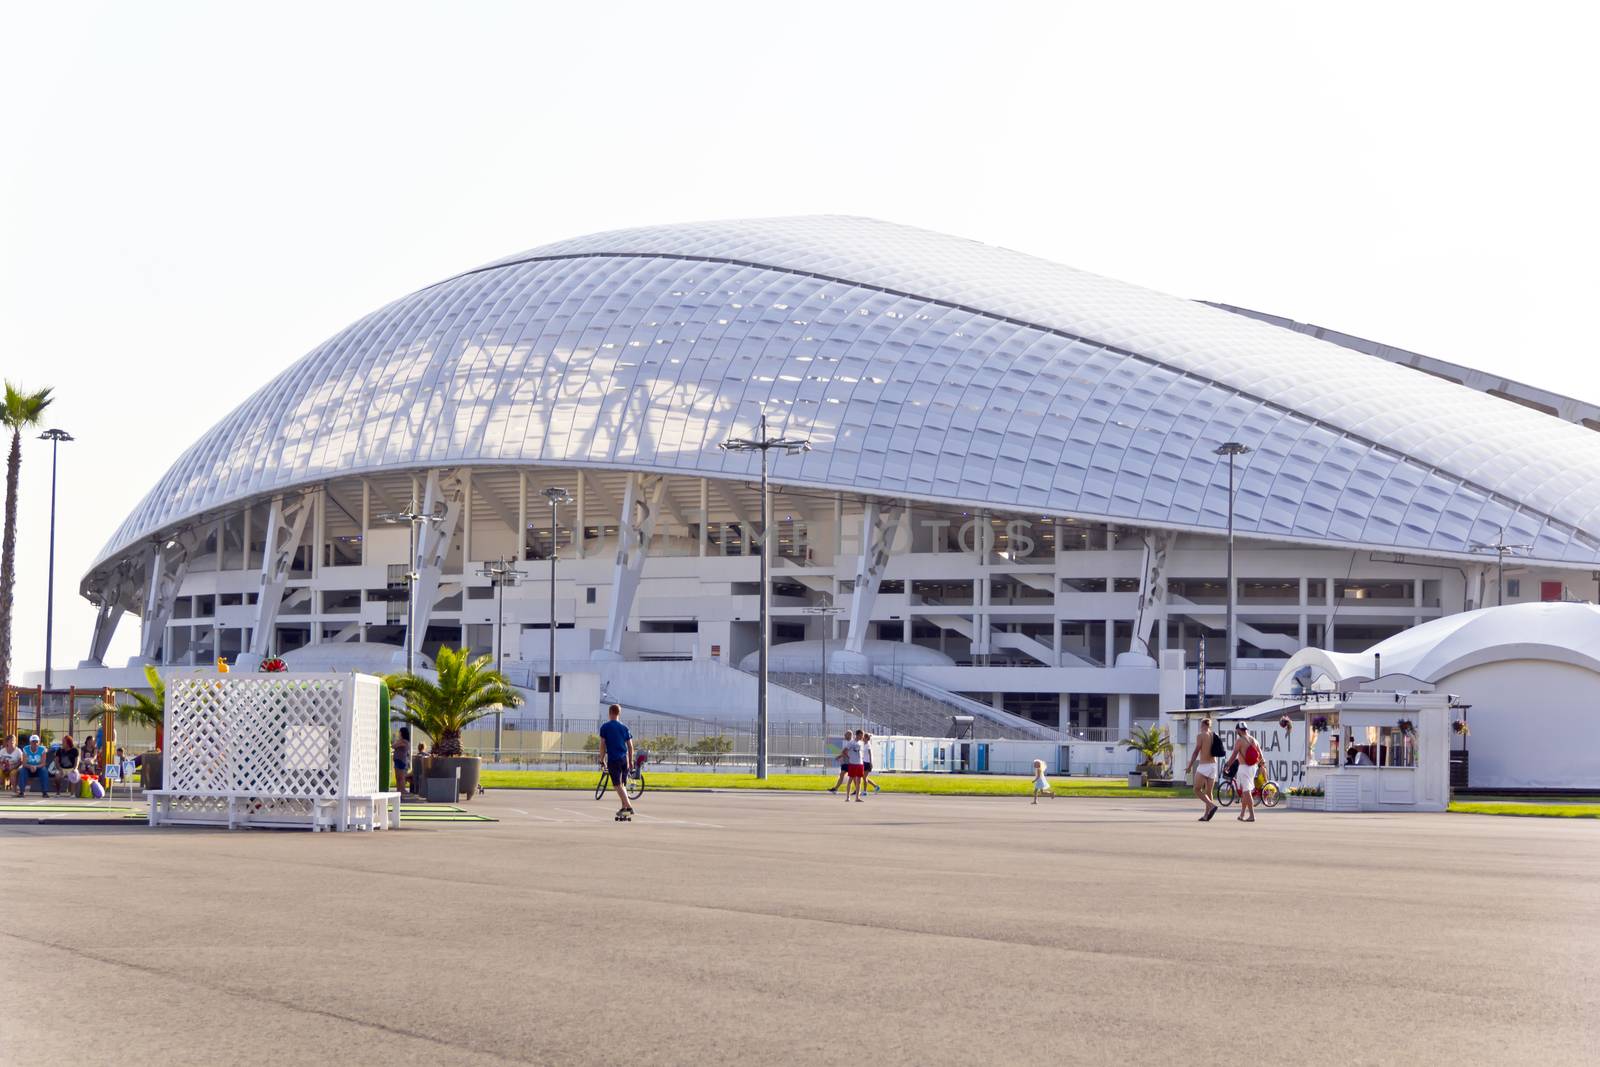 Photo of modern stadium Fischt in Russian Sochi